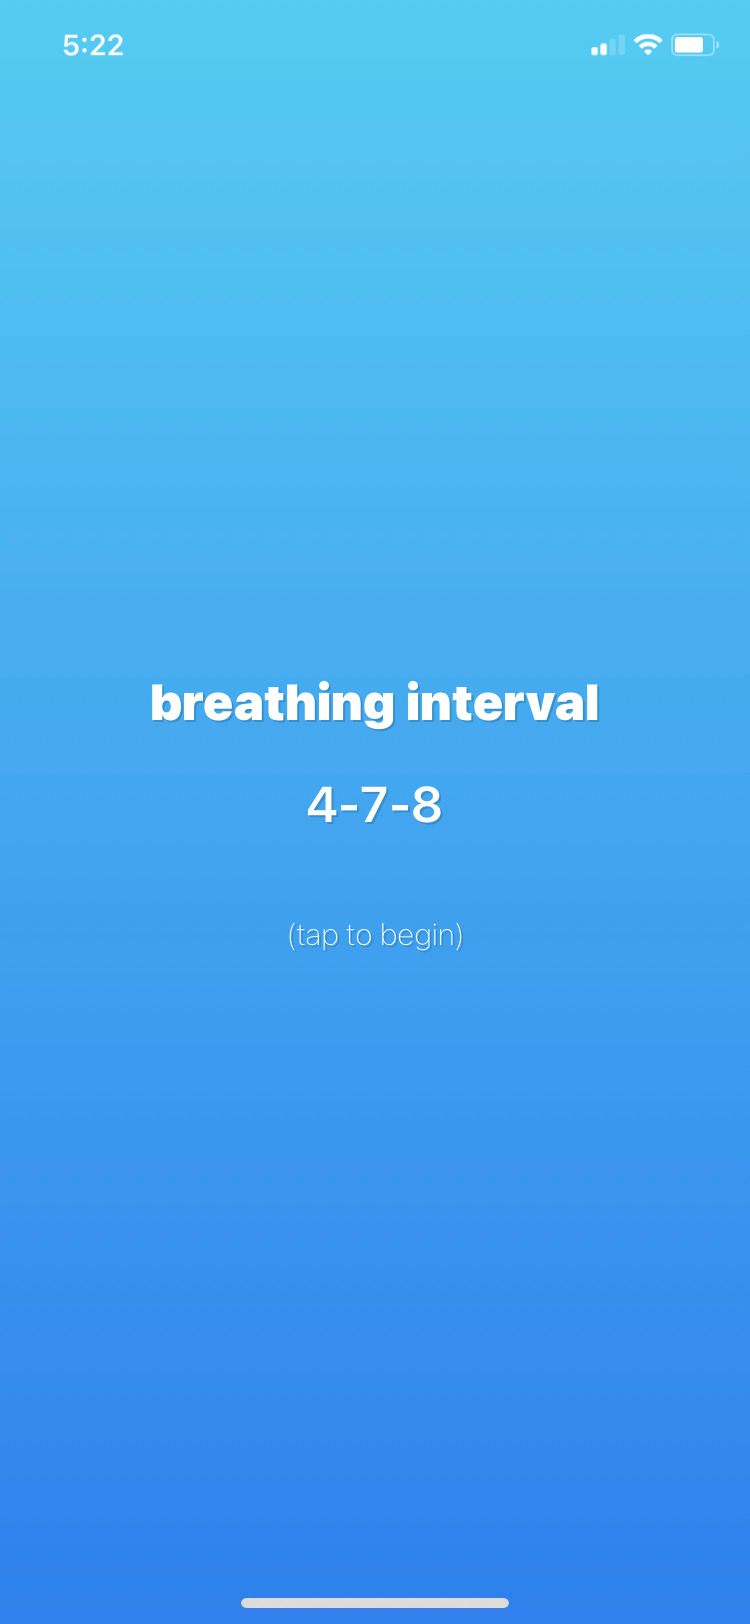 iBreathe app breathing intervals